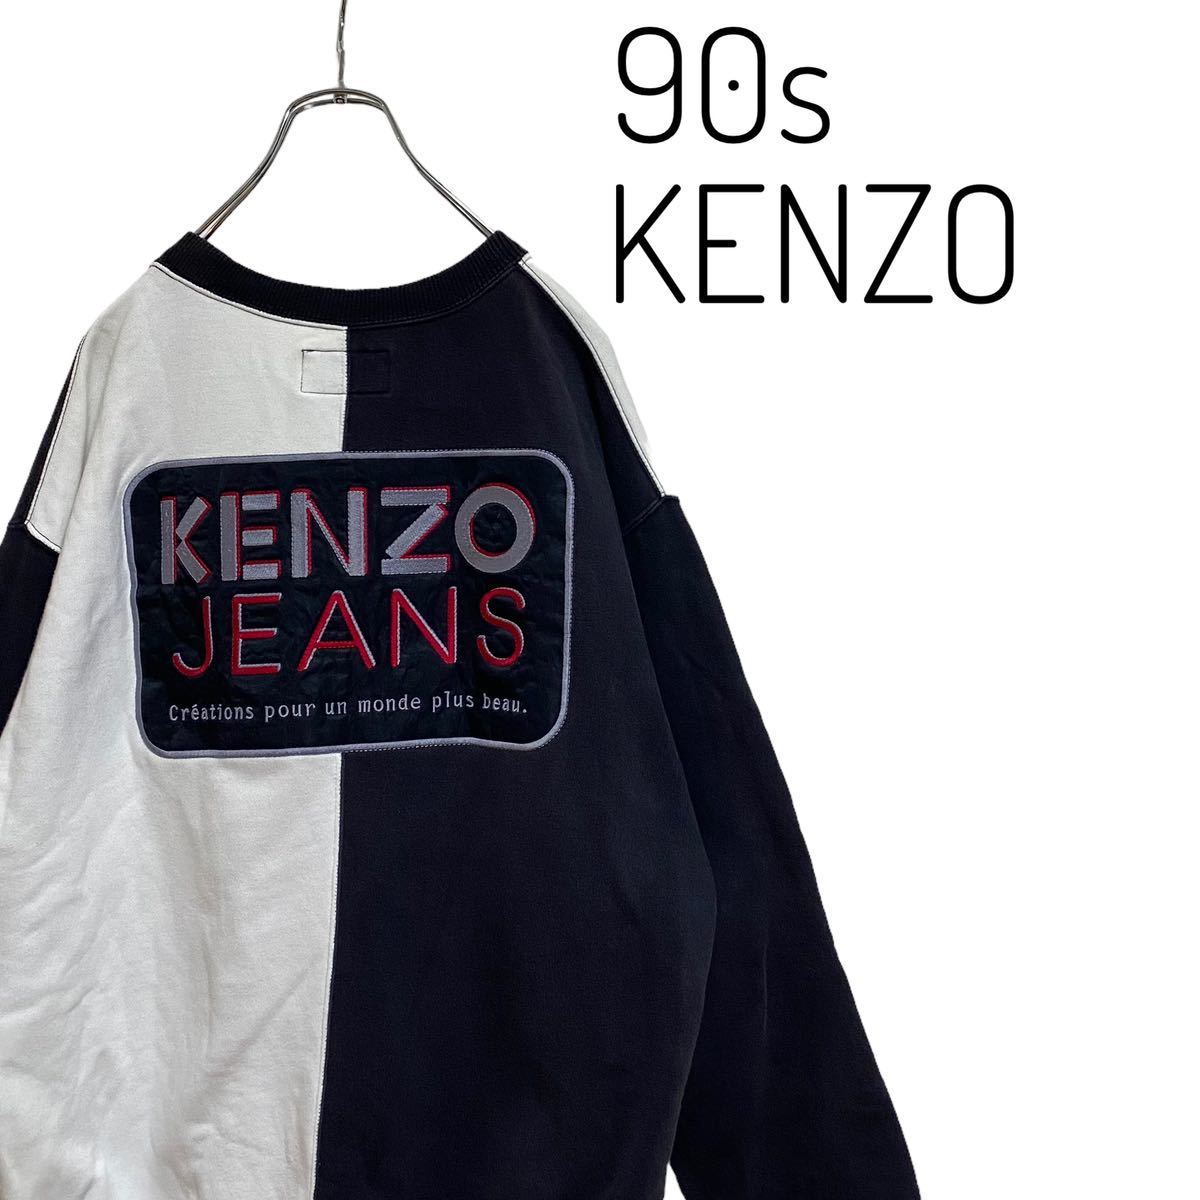 【90s】KENZO JEANS 刺繍 ロゴ ワッペン スウェット メンズ L ケンゾー ジーンズ ビンテージ オールド 北斎タグ トレーナー アーカイブ